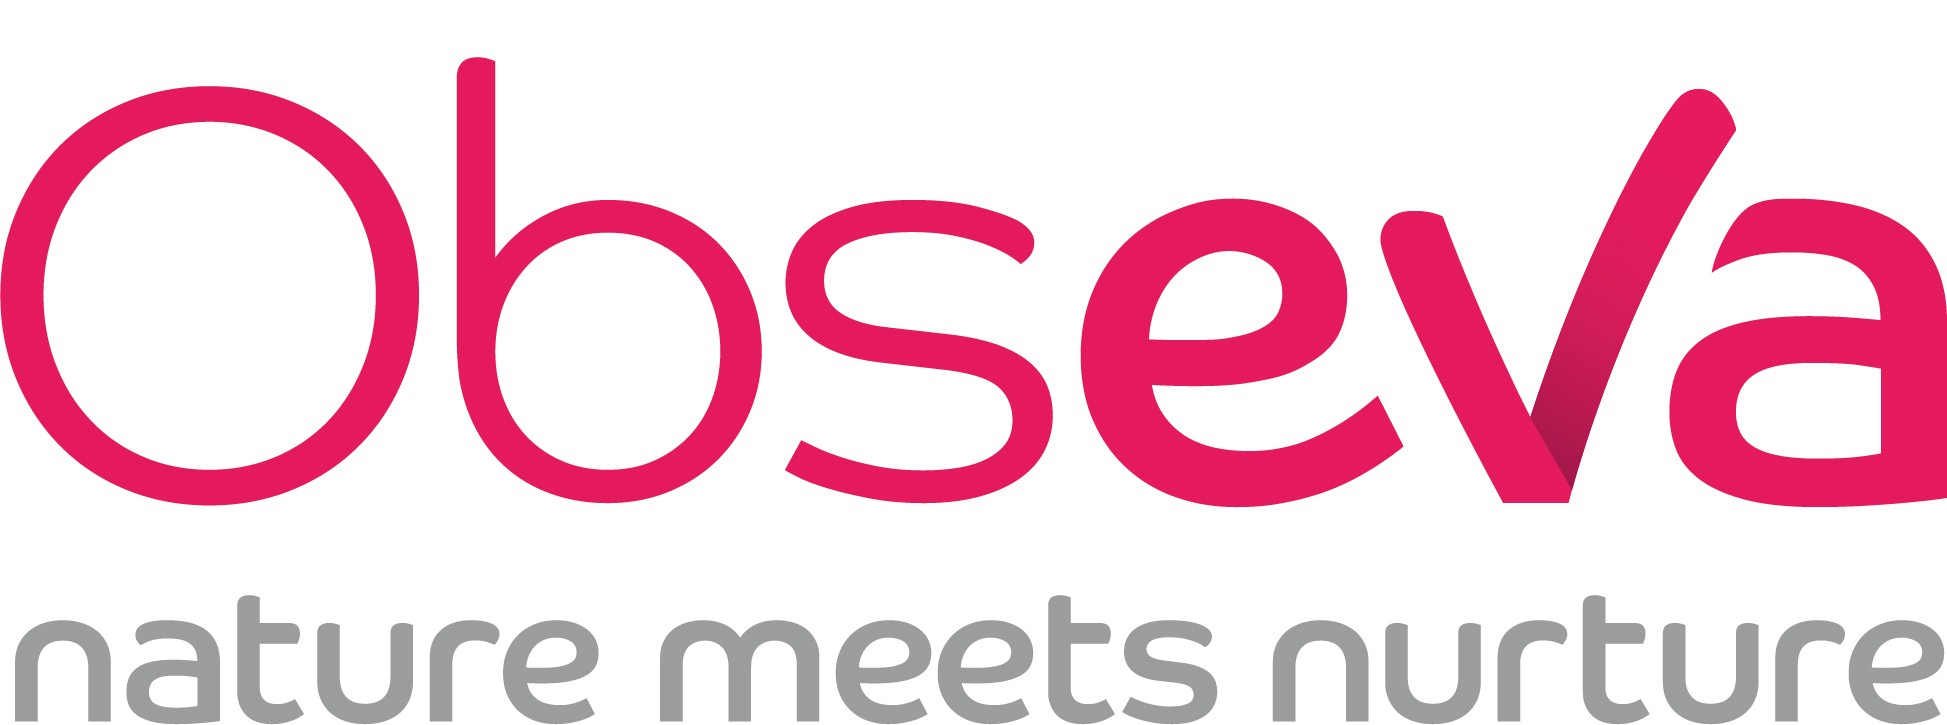 ObsEva Recovers Full Worldwide Rights on Nolasiban